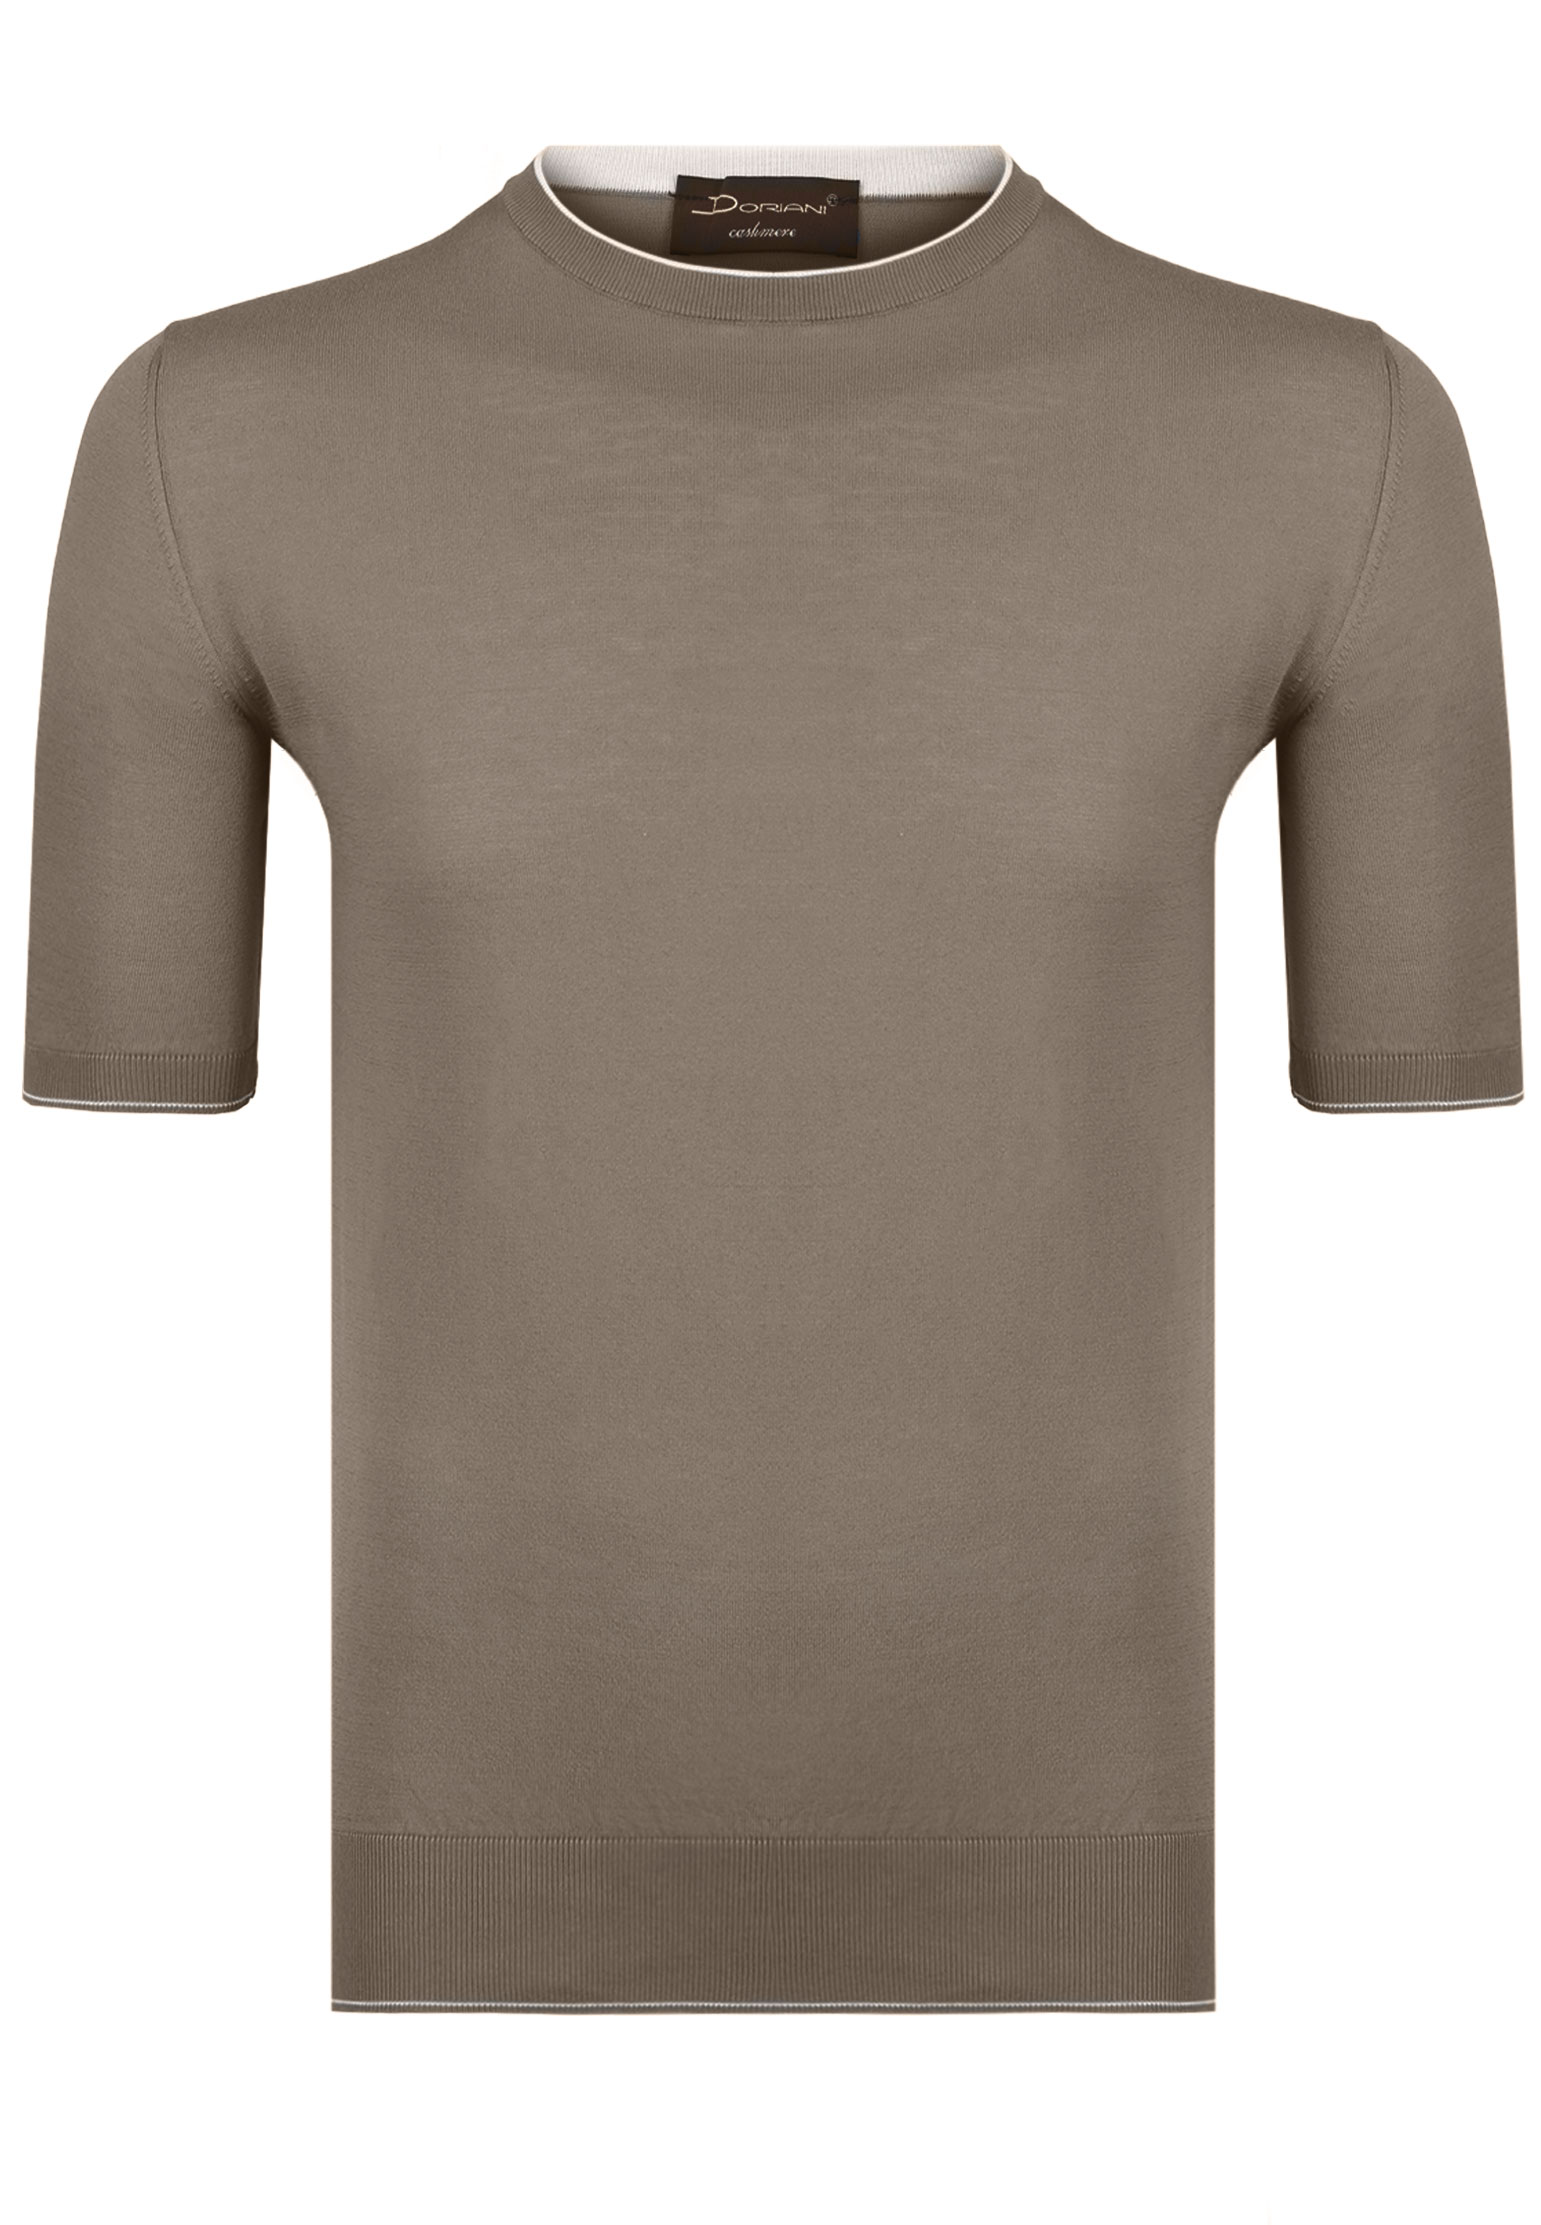 Пуловер DORIANI Серый, размер 48 178346 - фото 1